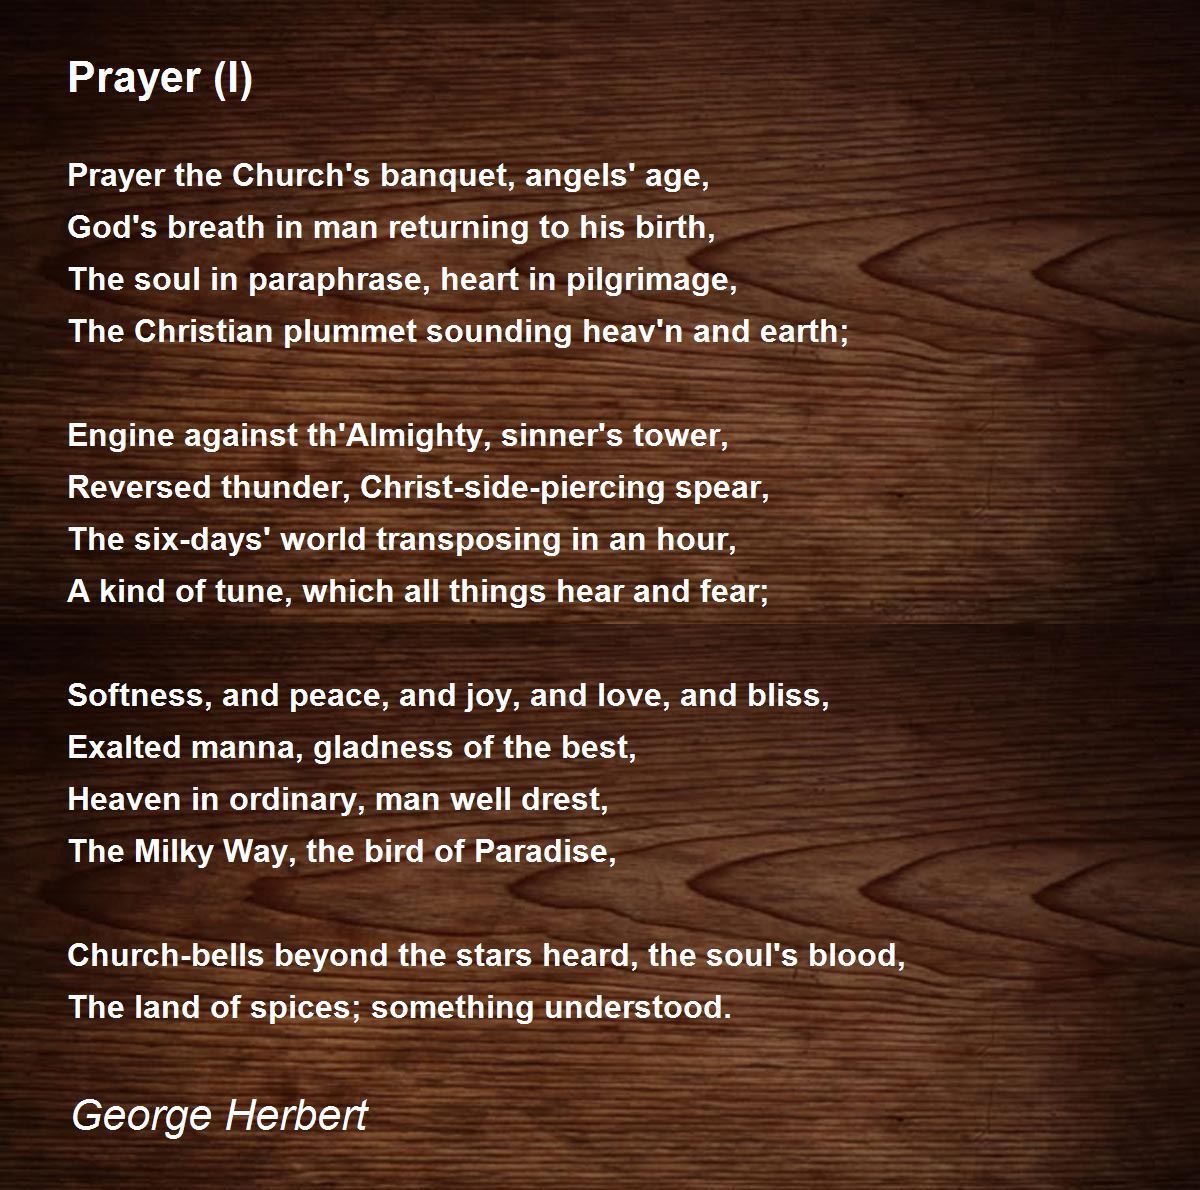 Prayer (I) Poem by George Herbert - Poem Hunter